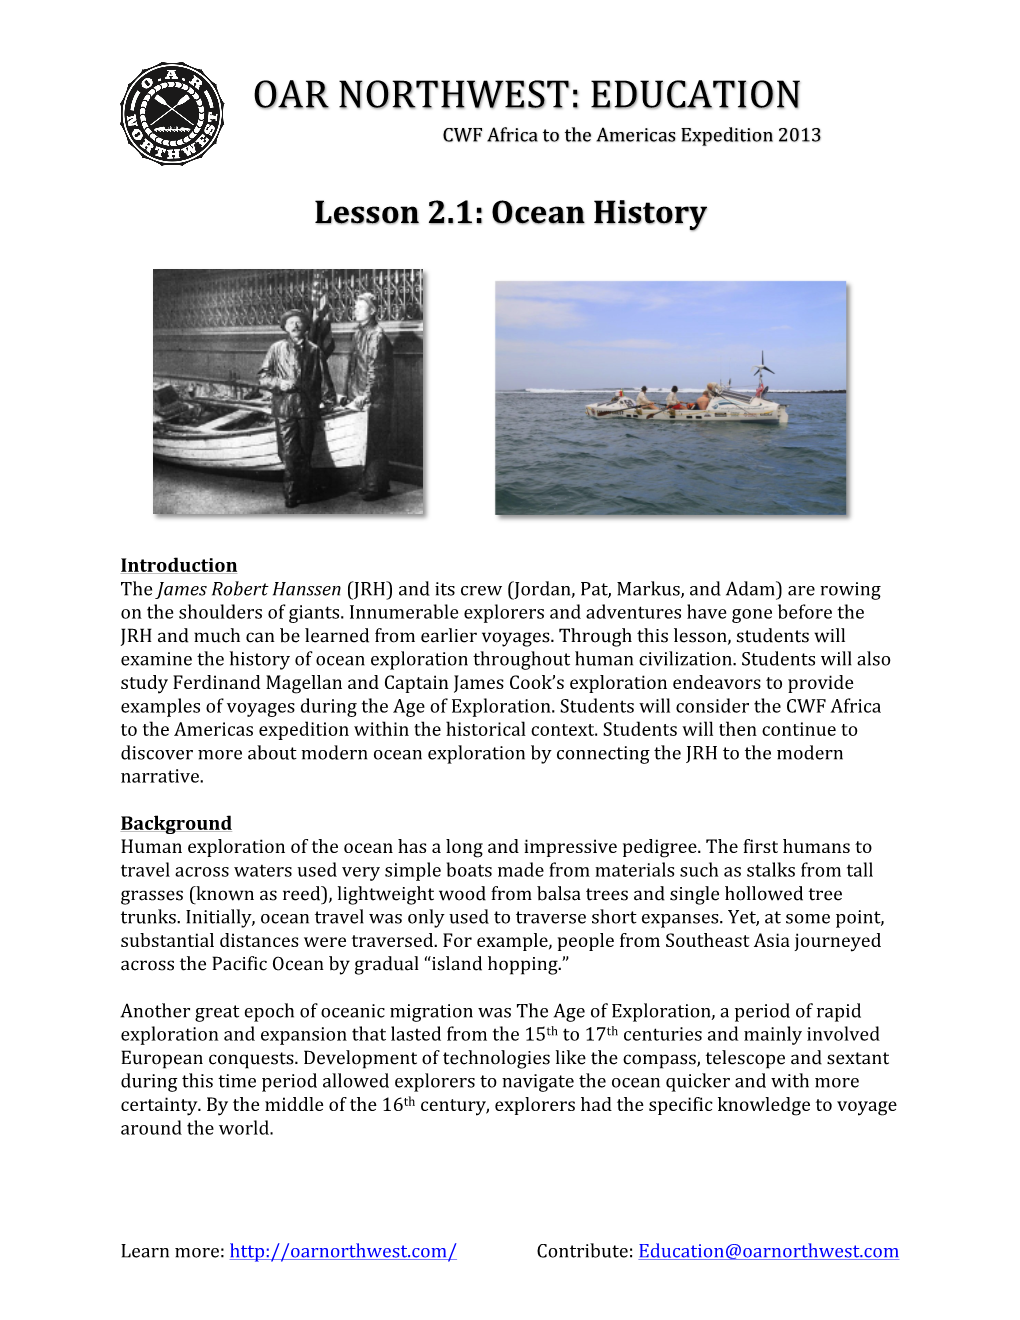 Lesson 2.1 Ocean History